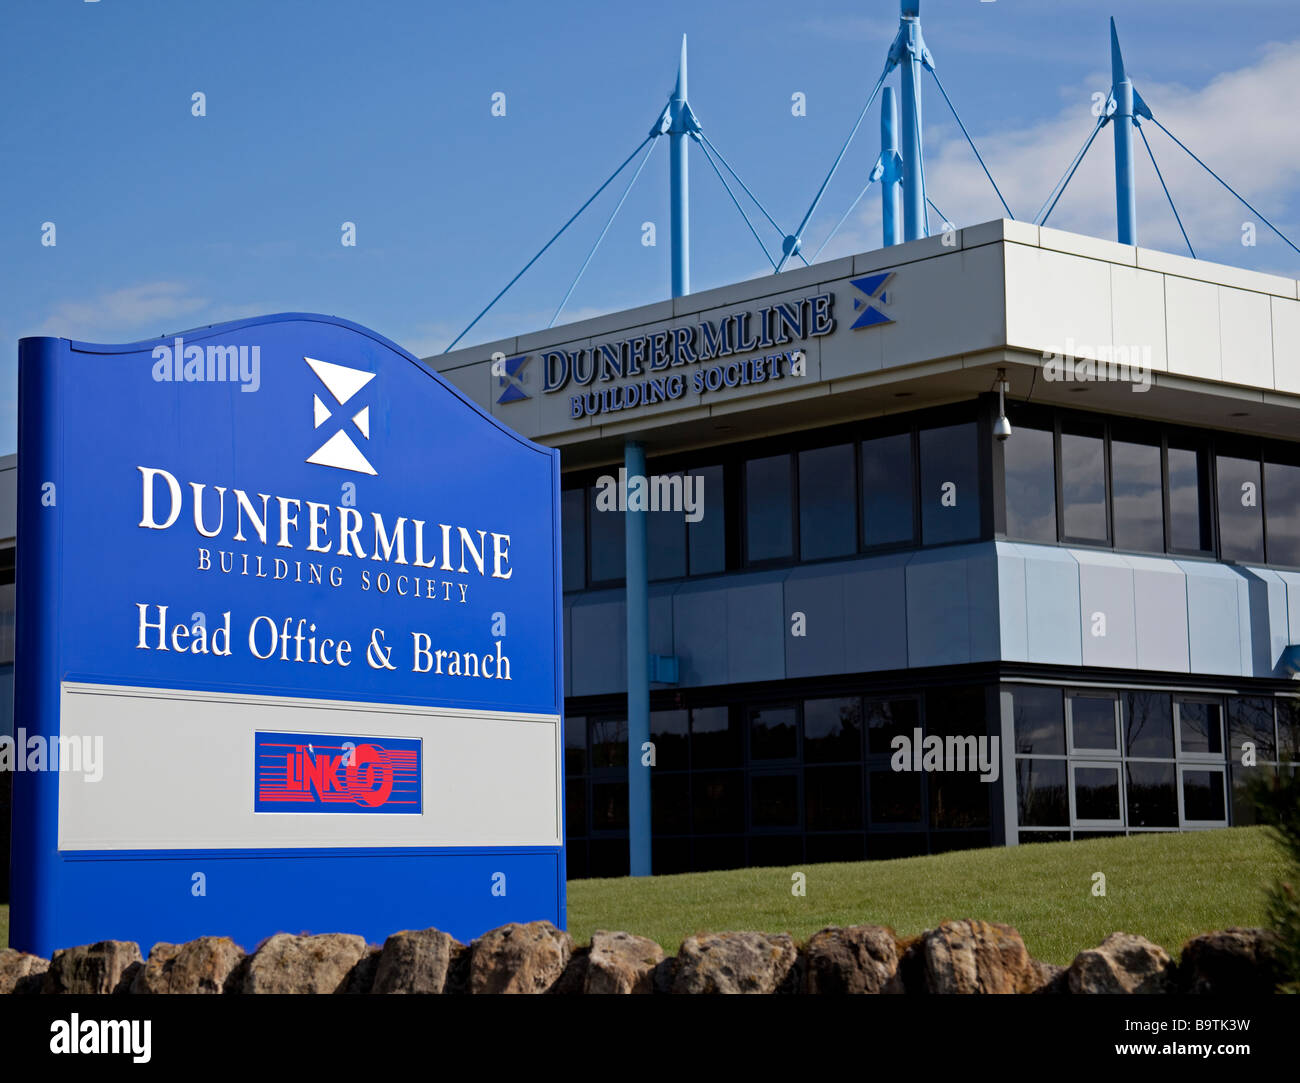 Dunfermline Building Society, siège social, Dufermline, Fife, Scotland, UK, Europe Banque D'Images